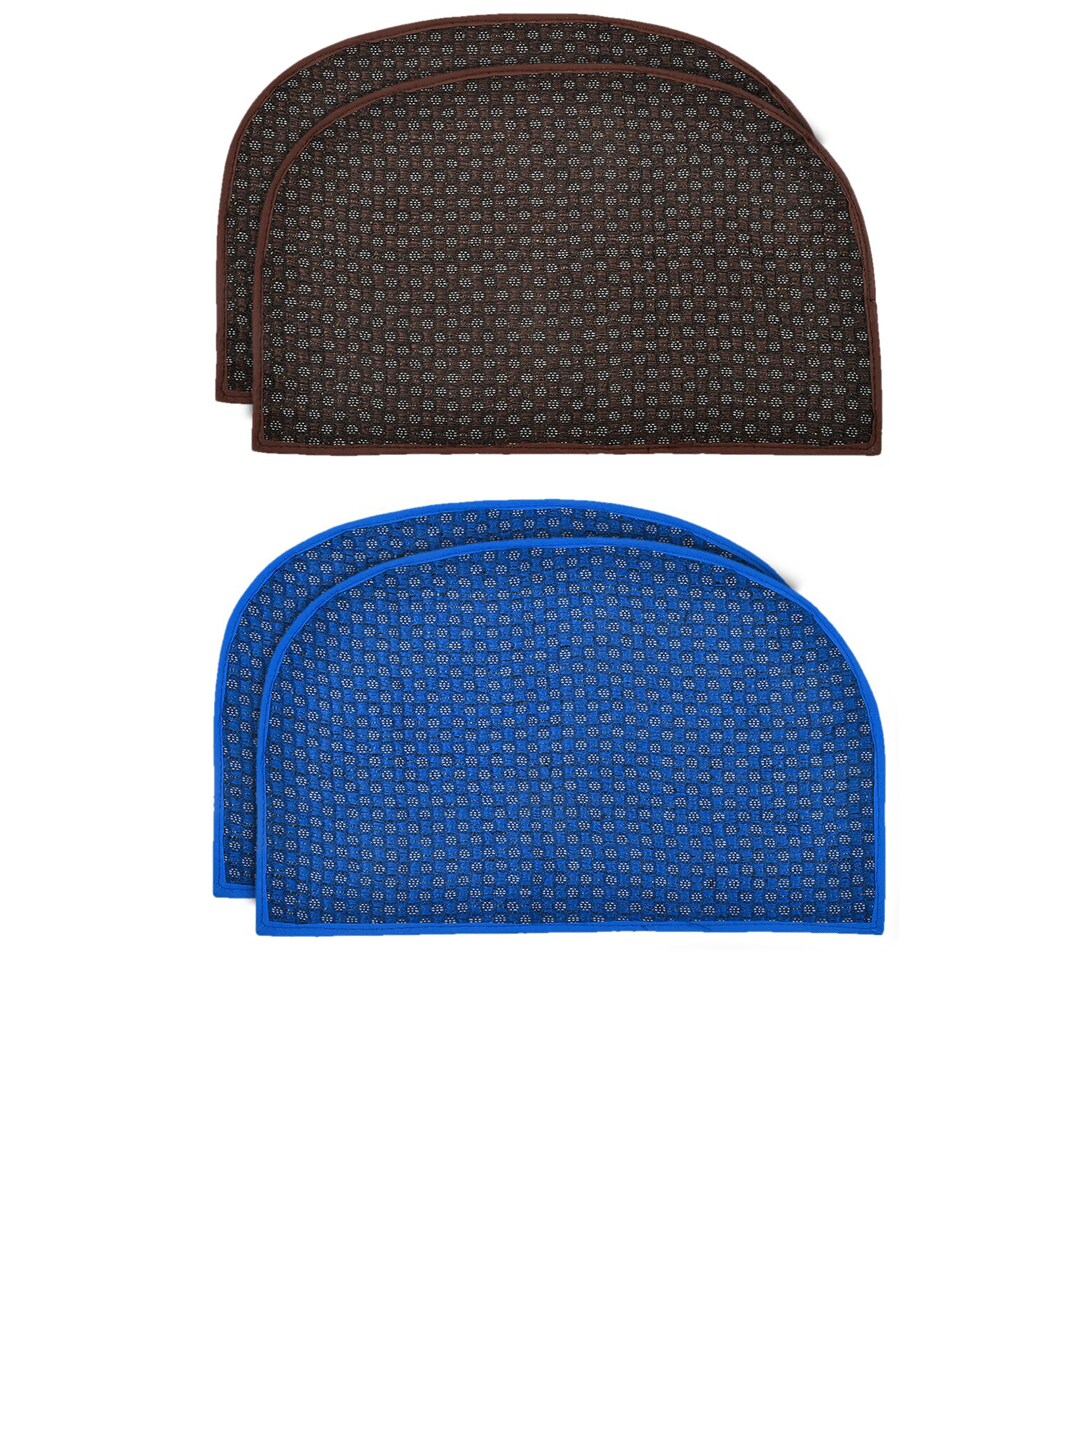 Kuber Industries Pack Of 4 Brown & Blue Woven Design Anti-Skid Doormat Price in India